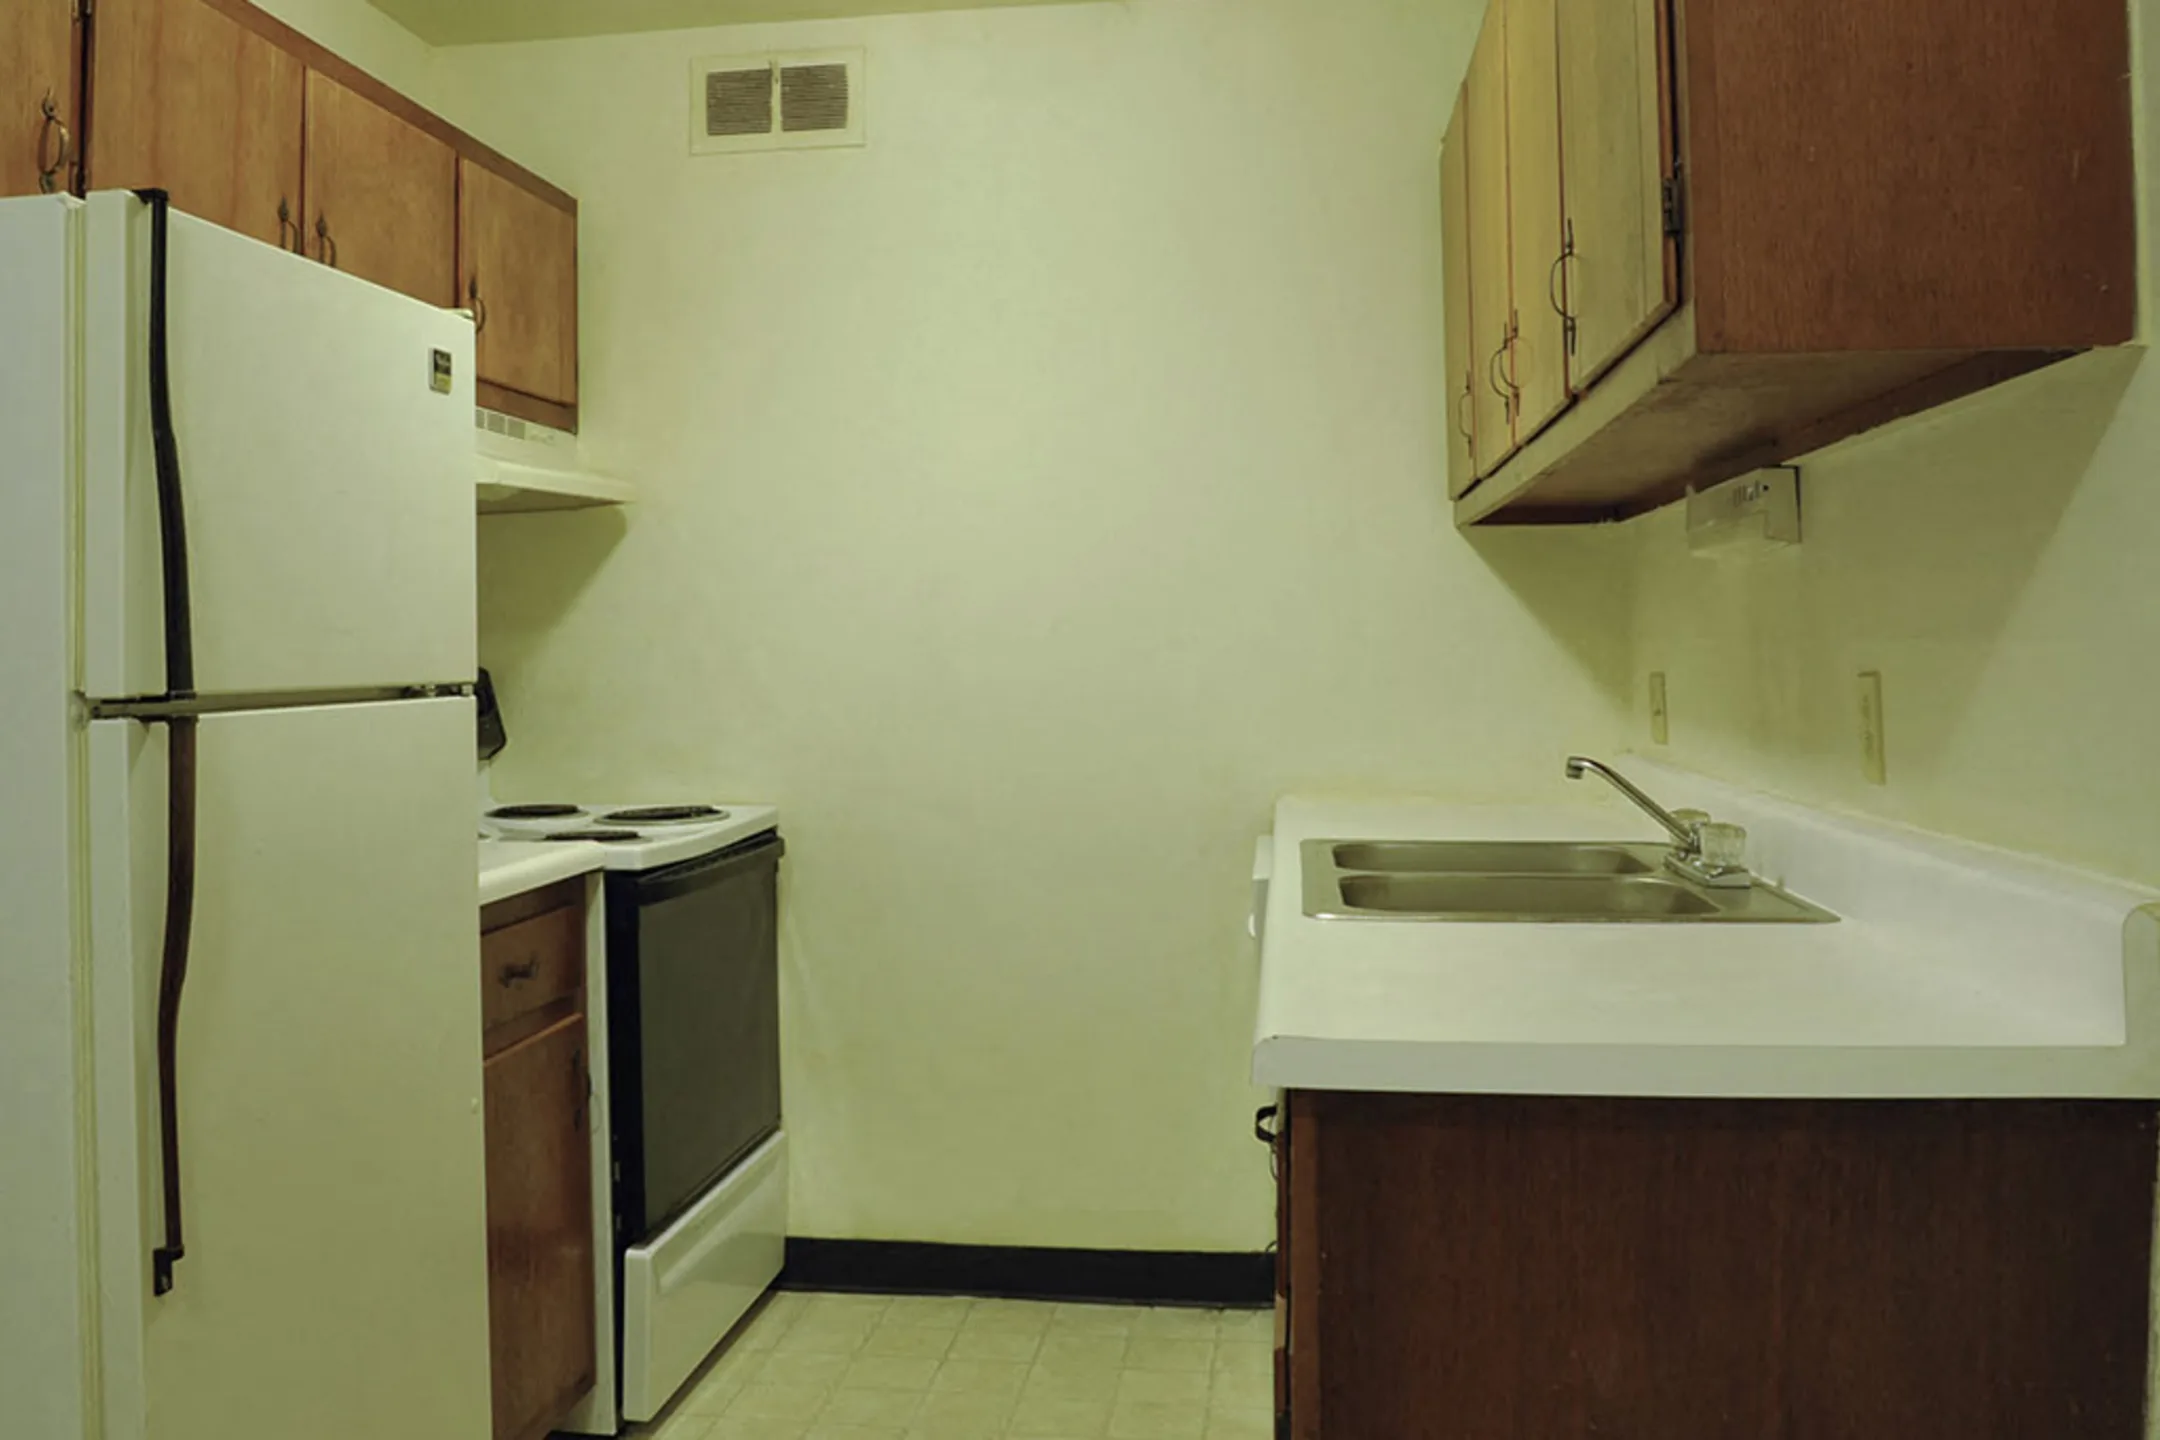 Kitchen - Timberbrook Apartments - Peoria, IL